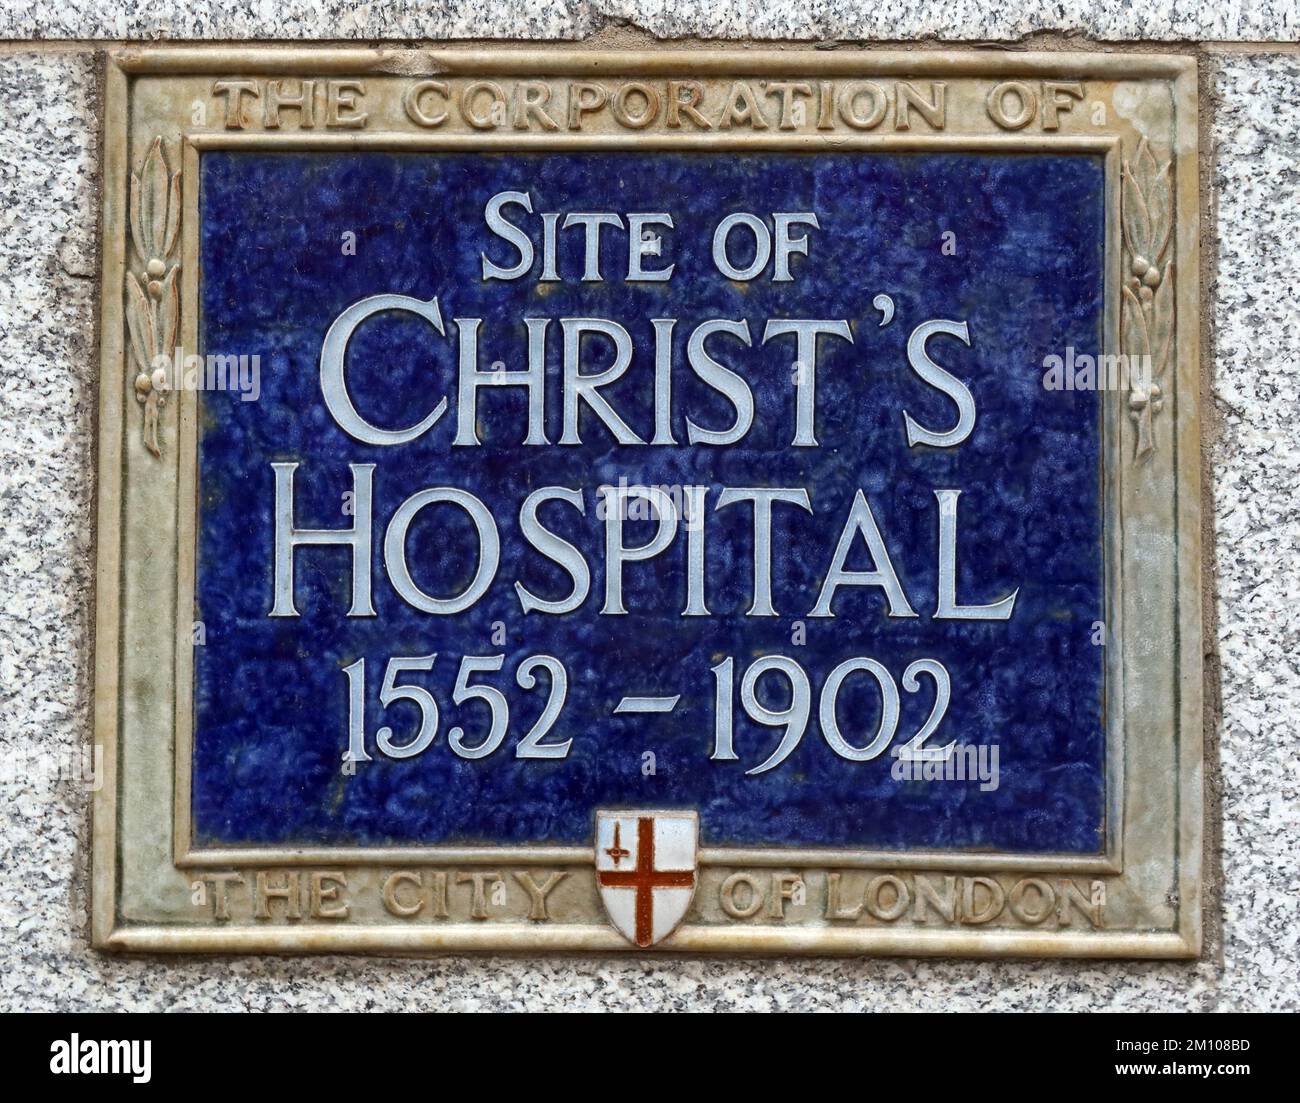 Site of Christs Hospital 1552-1902, City of London Plaque, Christchurch, Newgate Street, Londra, Inghilterra, REGNO UNITO, EC1A 7AJ Foto Stock